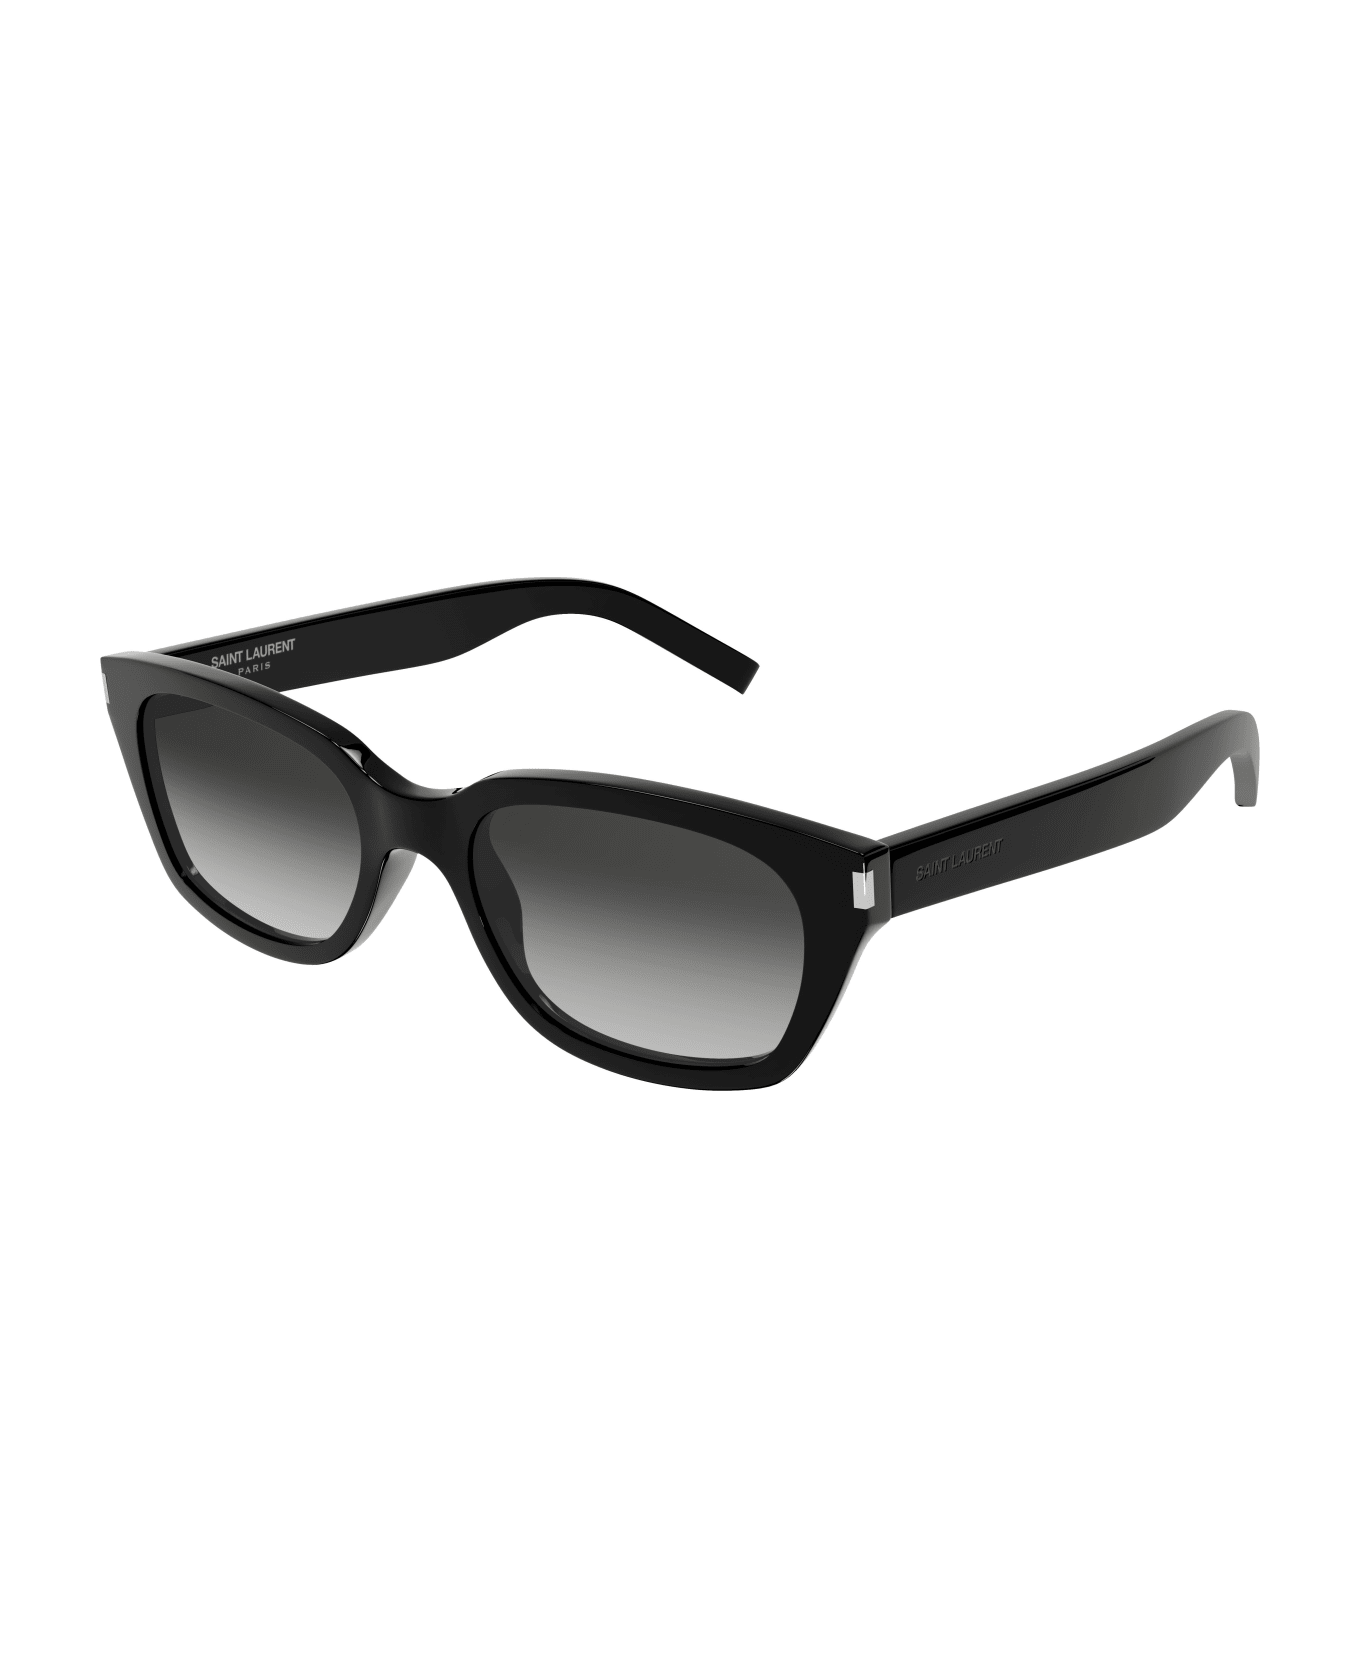 Saint Laurent Eyewear 1blf4br0a - 001 black black grey